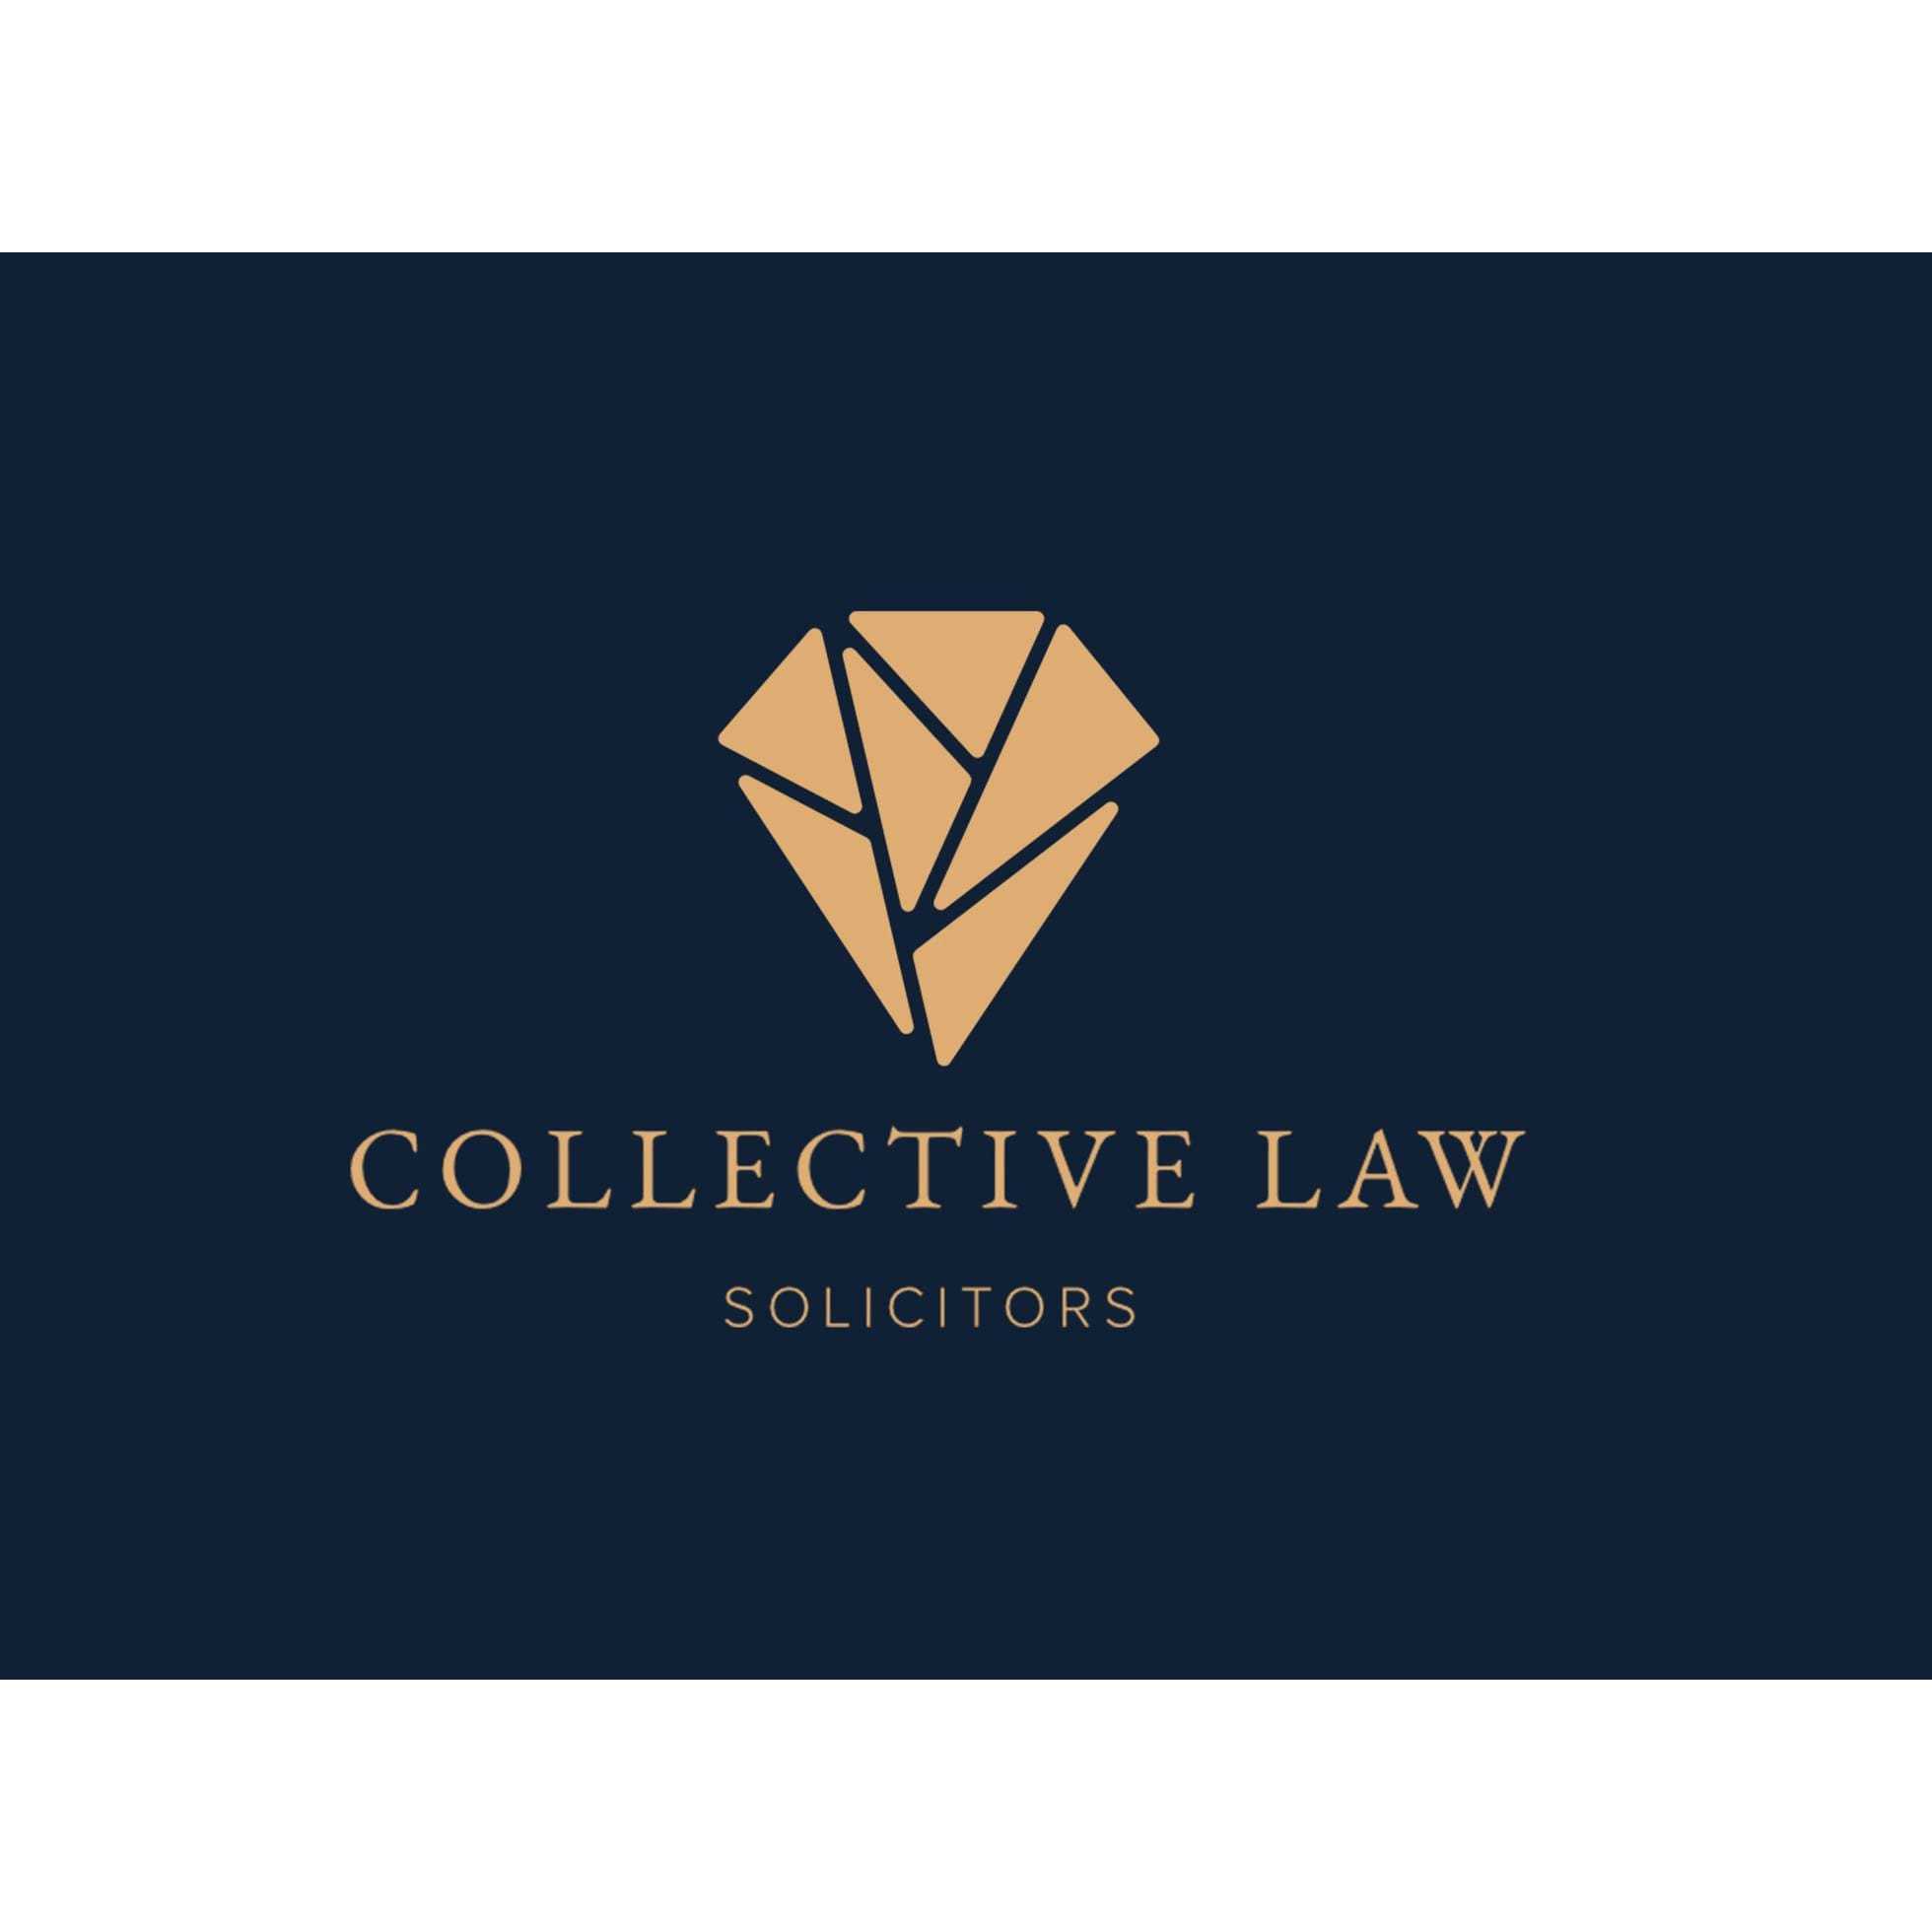 Collective Law Solicitors Ltd - Birmingham, West Midlands - 01216 676466 | ShowMeLocal.com